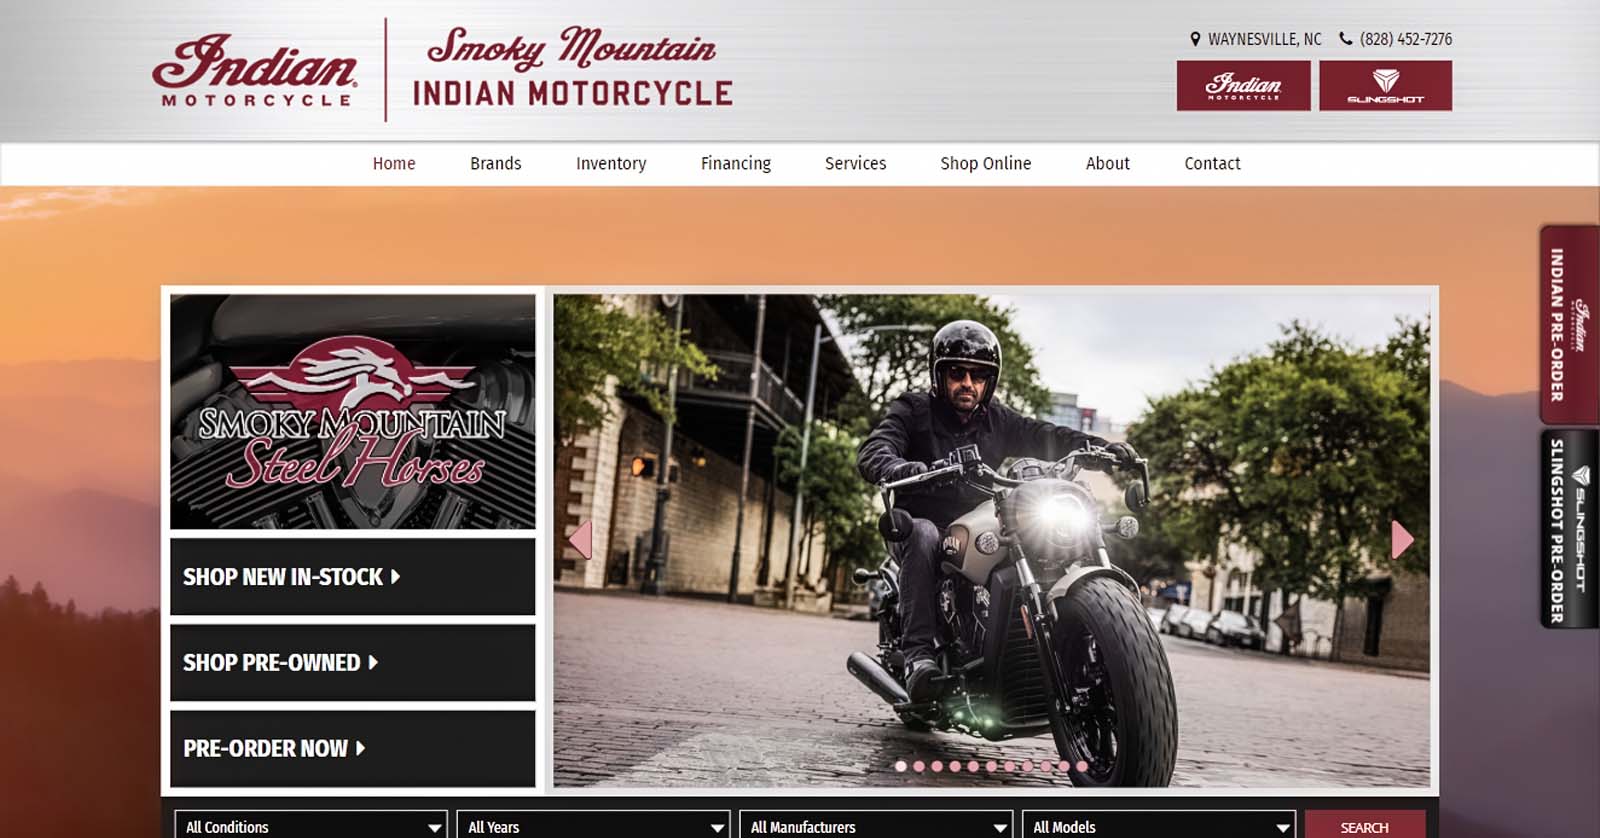 Indian Motorcycle & Polaris Slingshot Dealer, Waynesville NC | Smoky Mountain Steel Horses, LLC